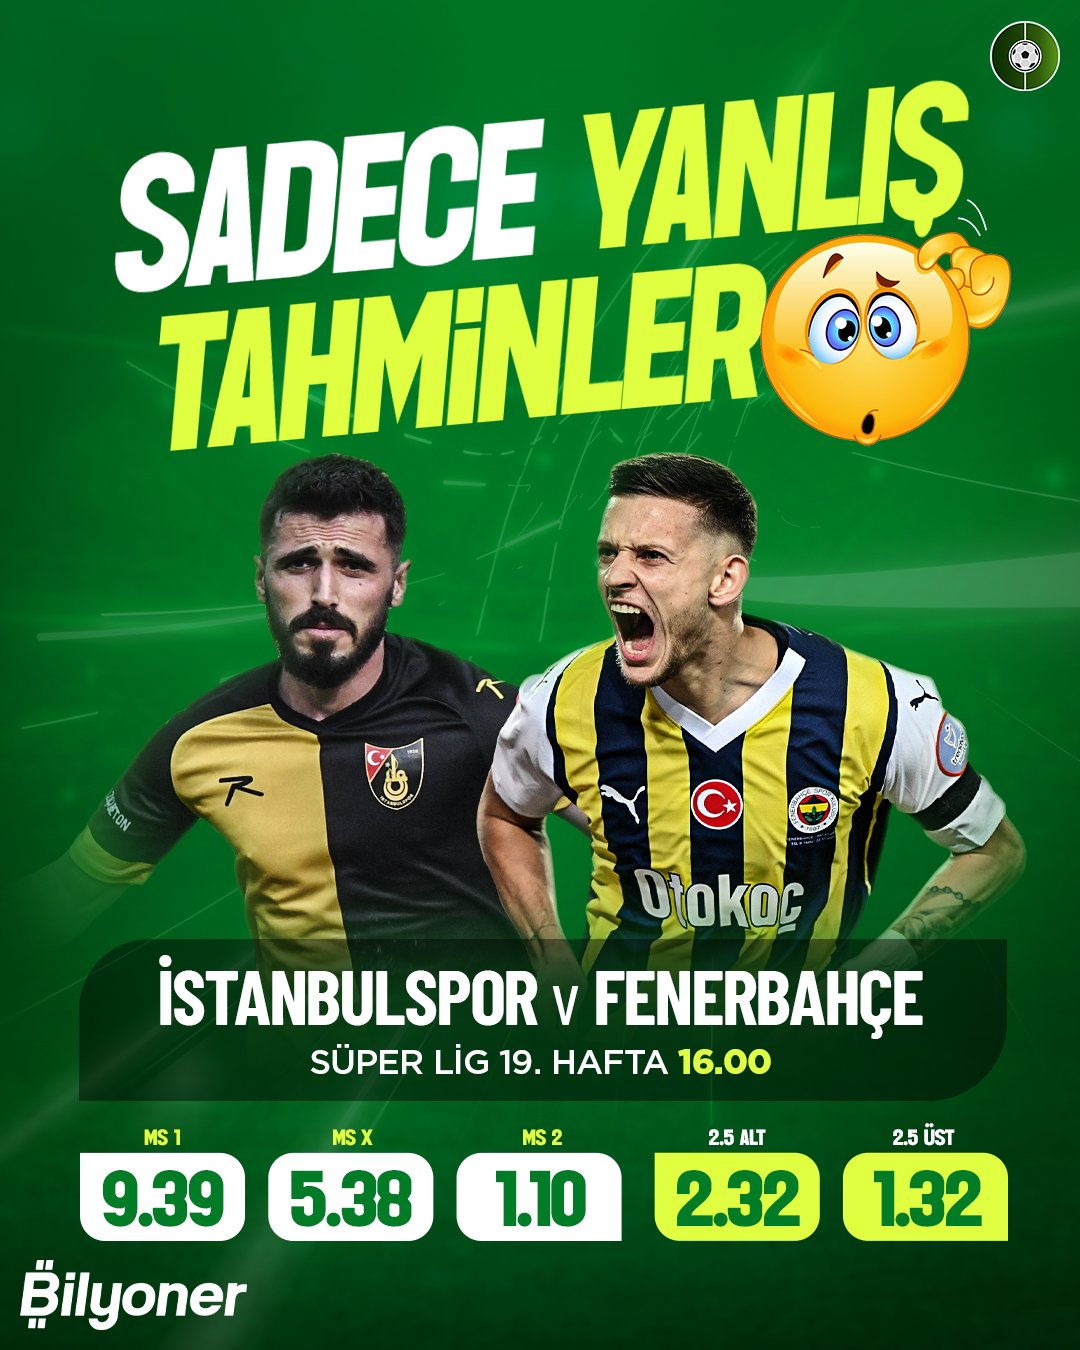 Fenerbahçe vs Galatasaray: The Rivalry that Defines Turkish Football